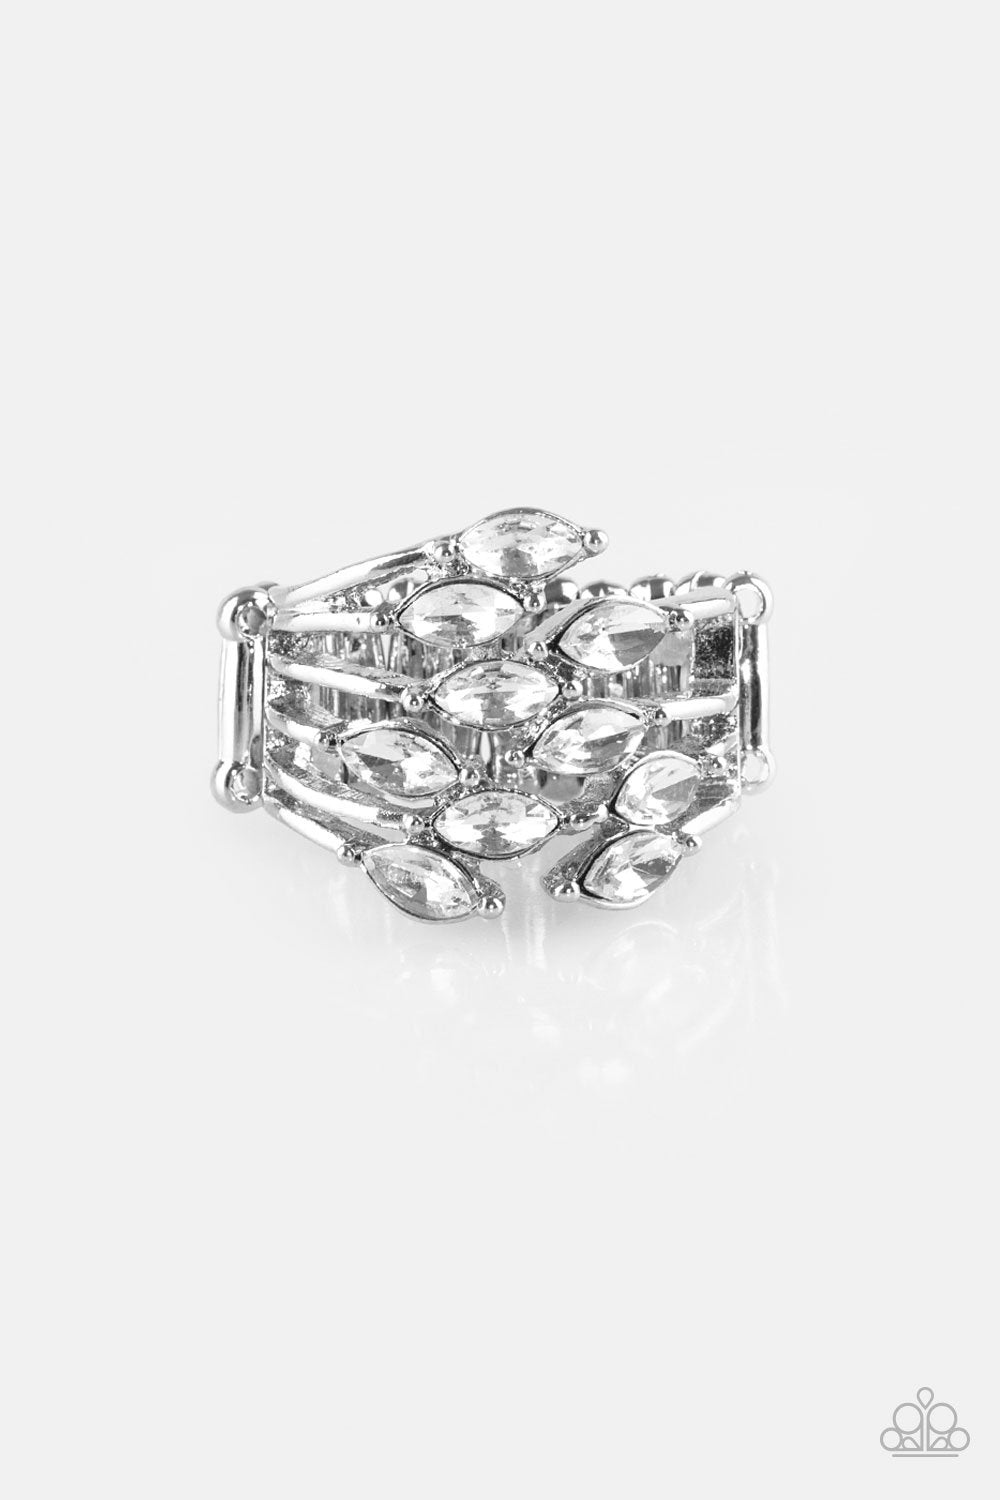 Five Alarm Fire White Rhinestone Ring - Paparazzi Accessories-CarasShop.com - $5 Jewelry by Cara Jewels